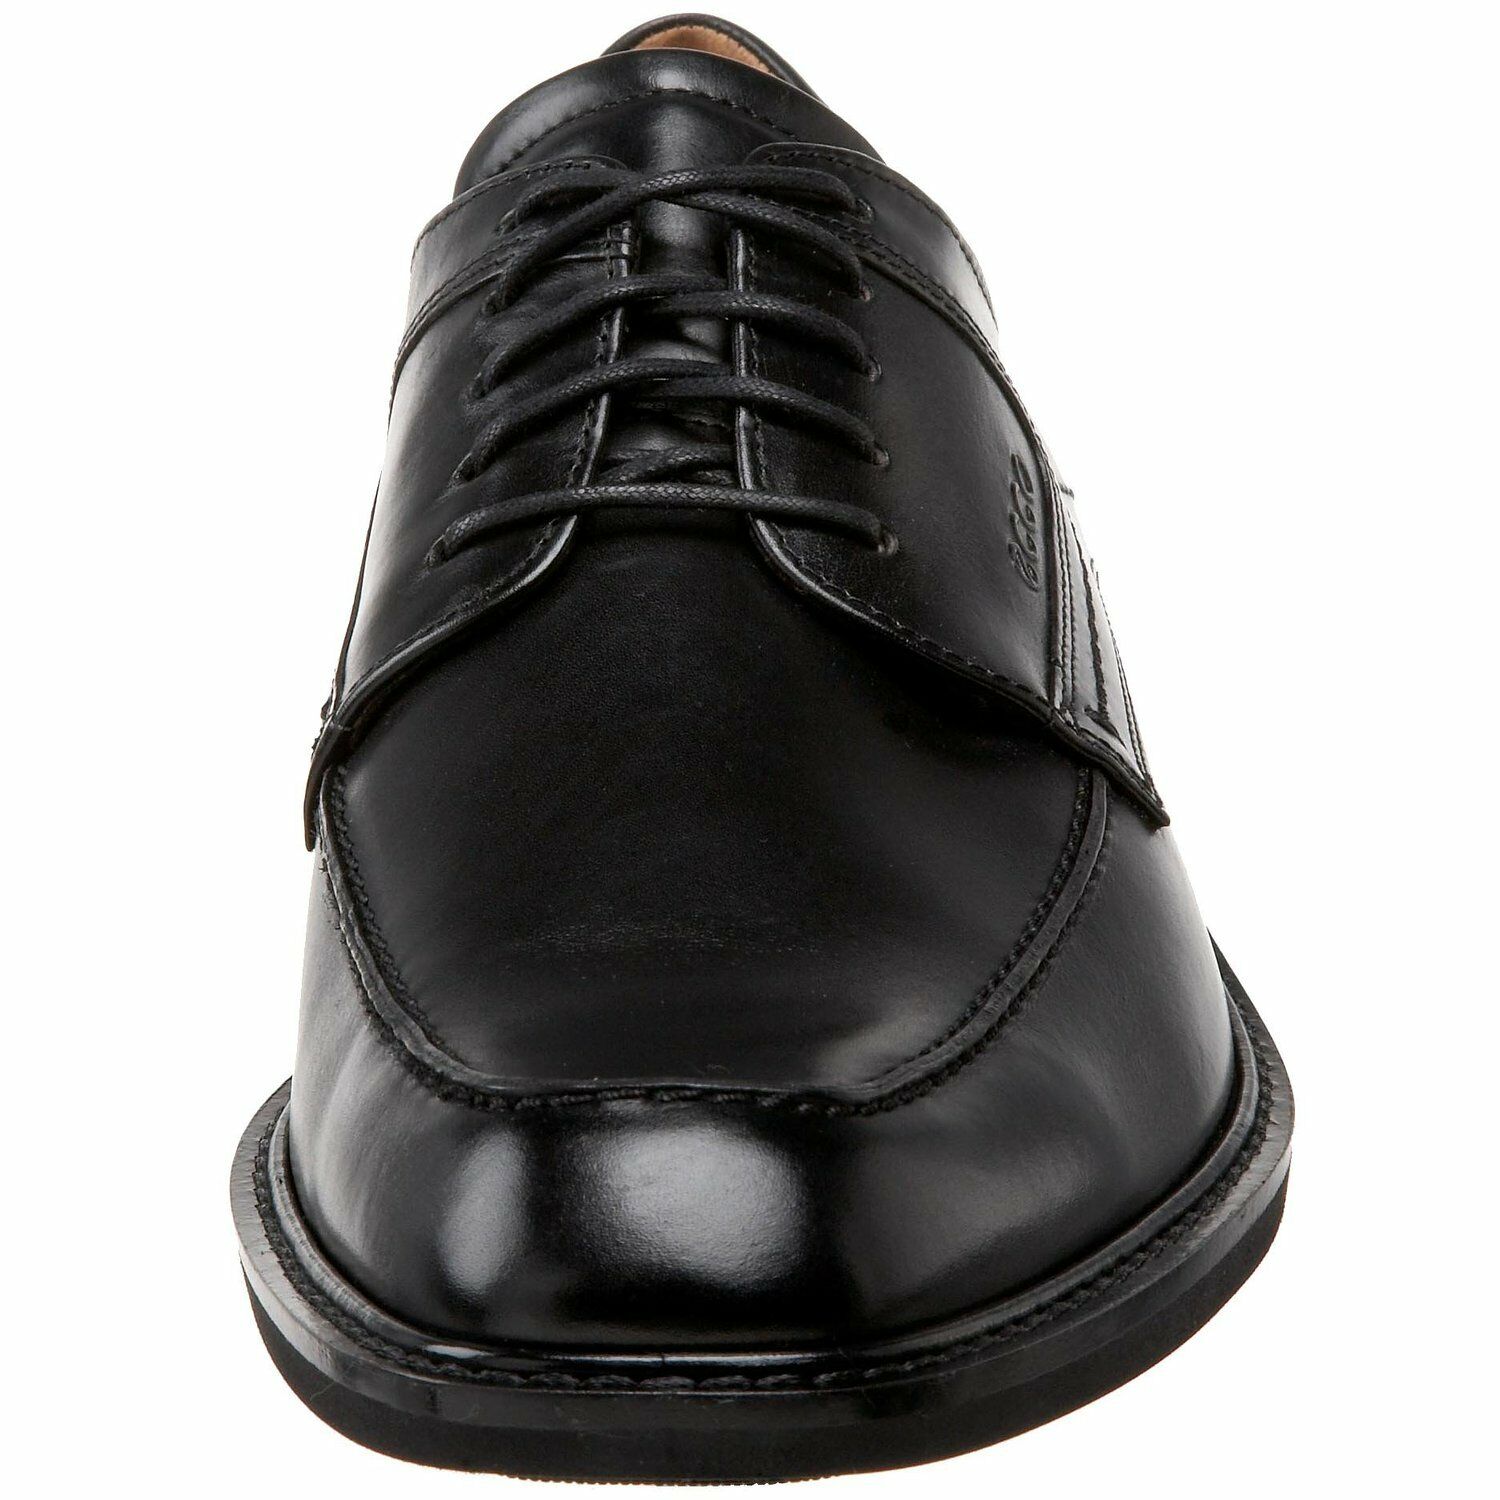 ECCO Men's 51814 Windsor Black Leather Lace Up Oxford